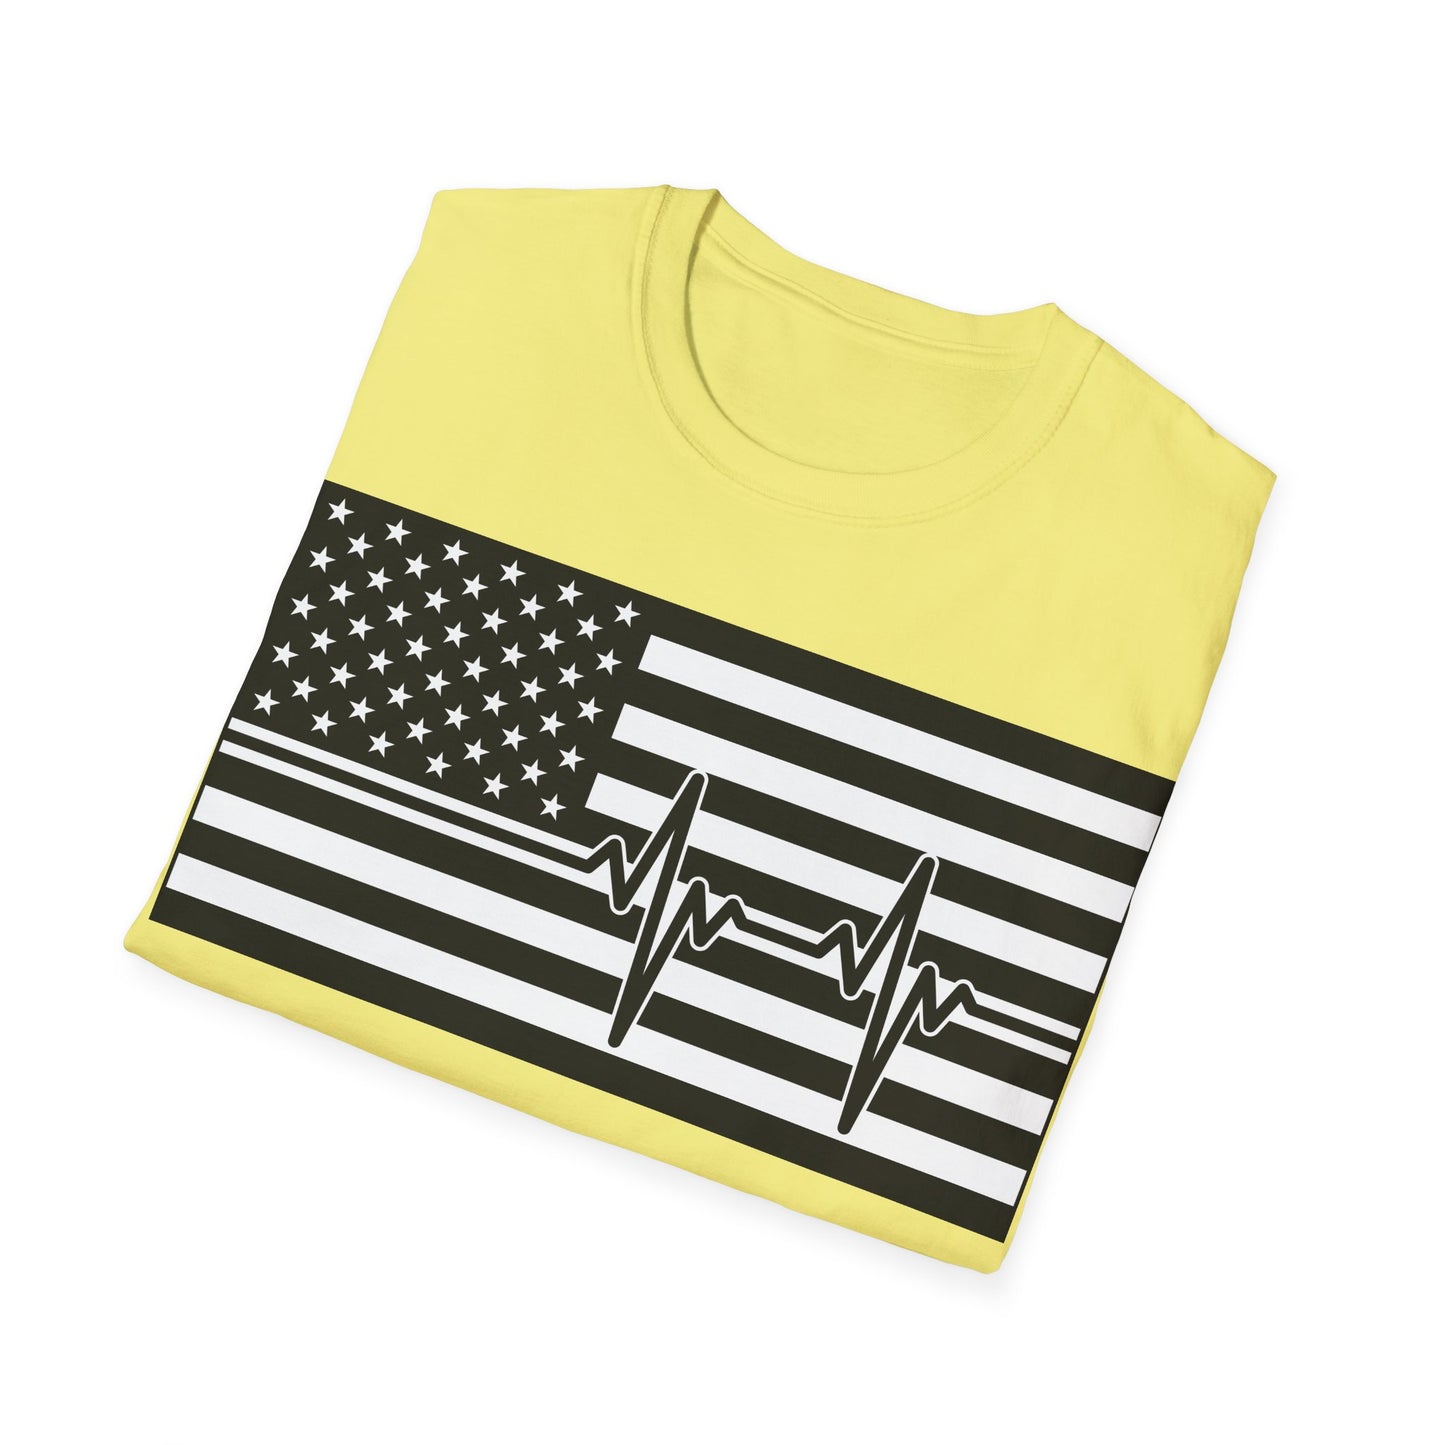 American Flag Heartbeat B&W - Unisex Softstyle T-Shirt